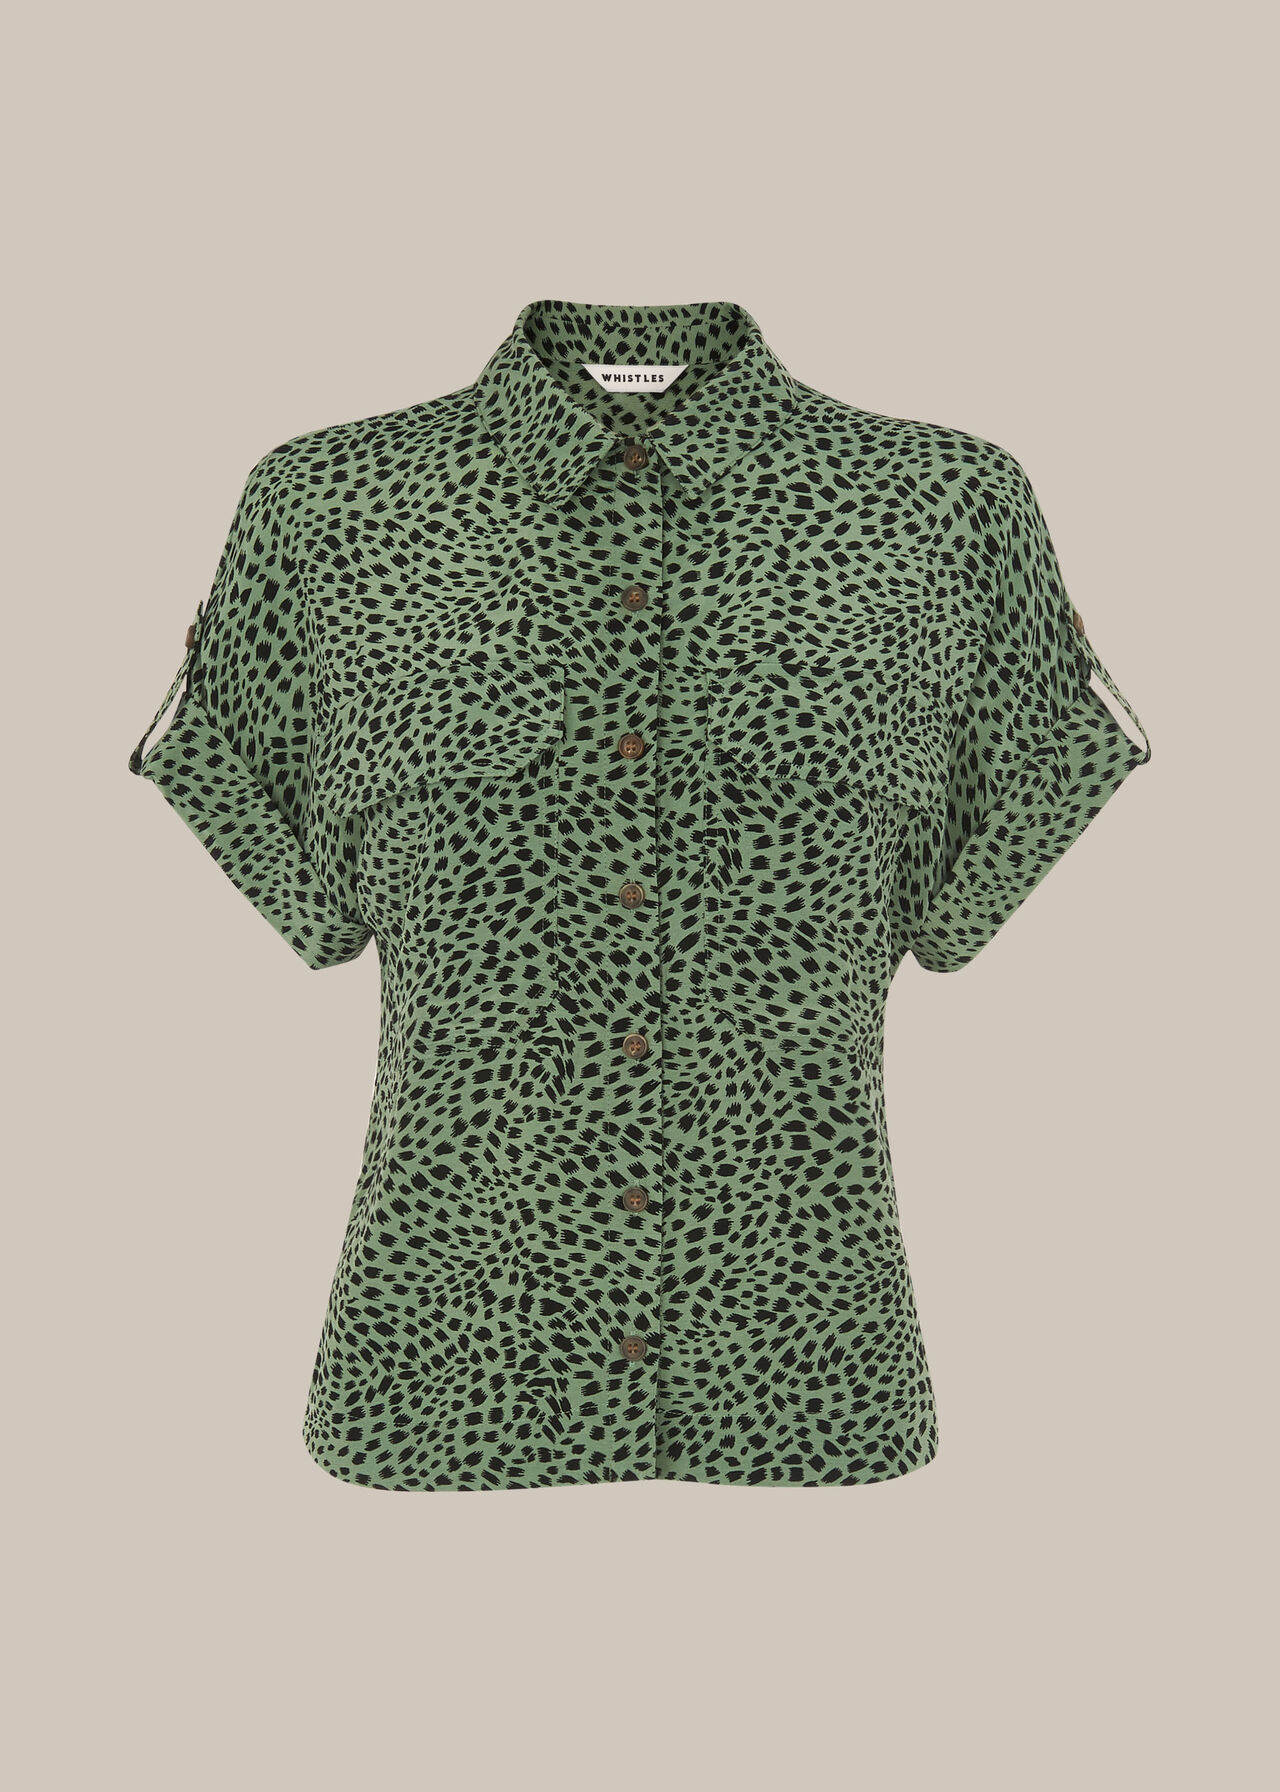 Spotted Animal Pocket Shirt Green/Multi